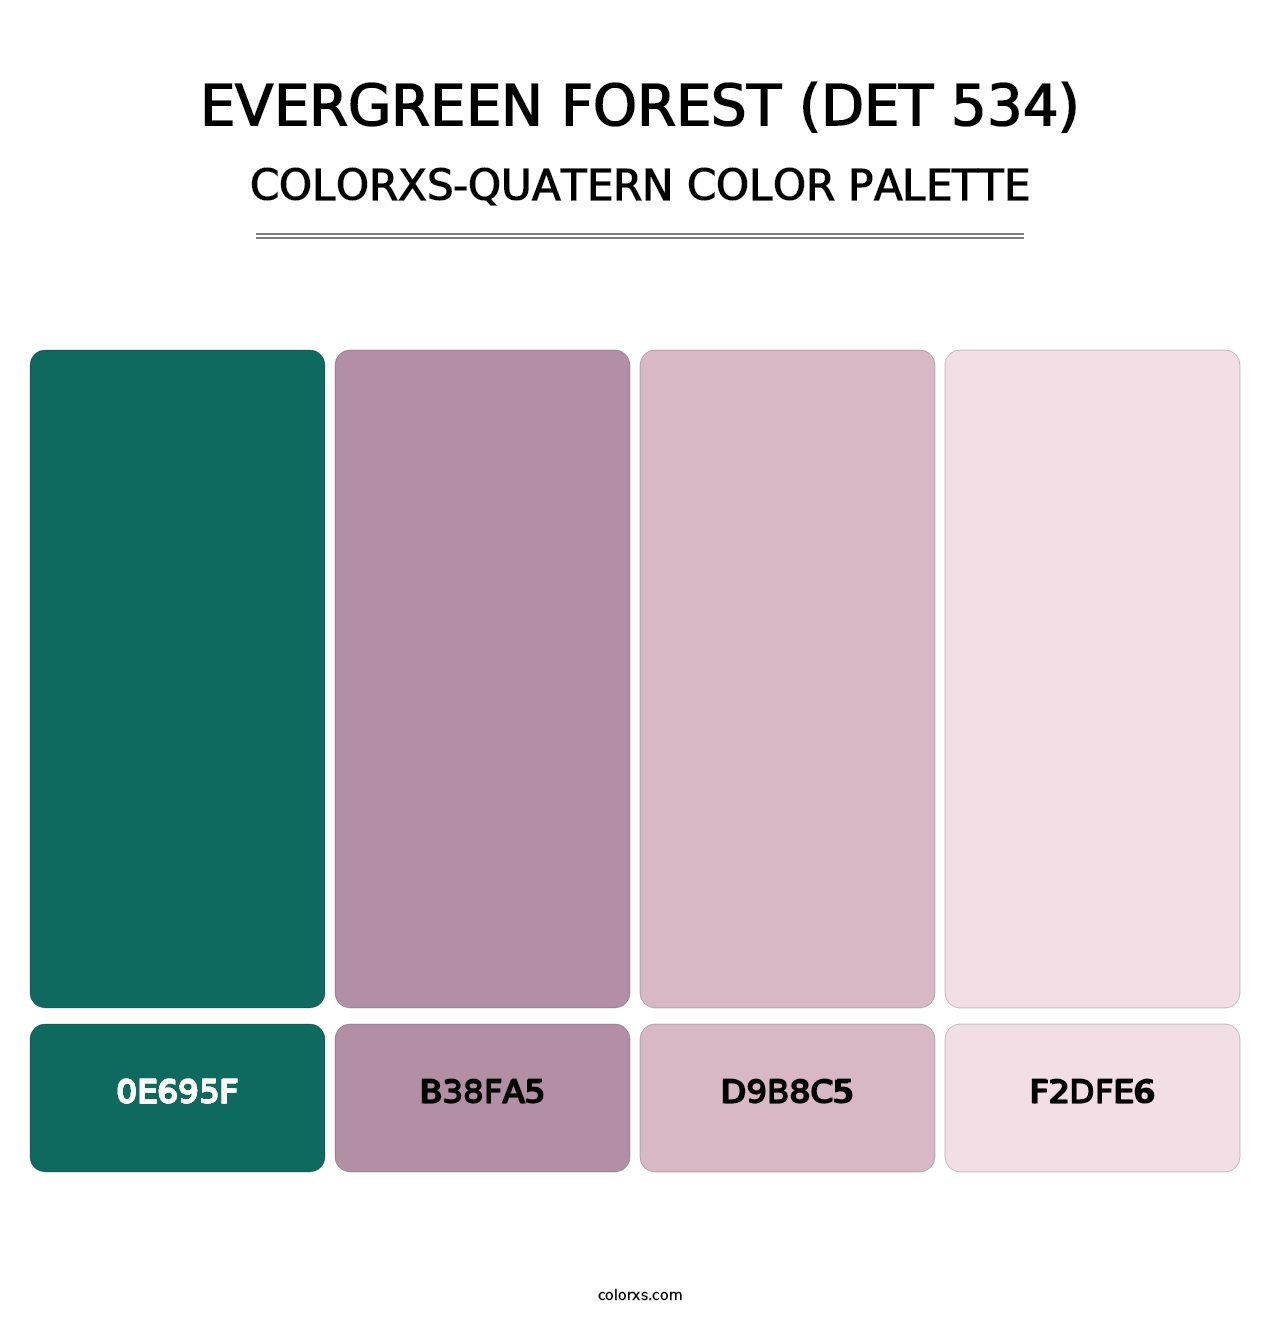 Evergreen Forest (DET 534) - Colorxs Quatern Palette